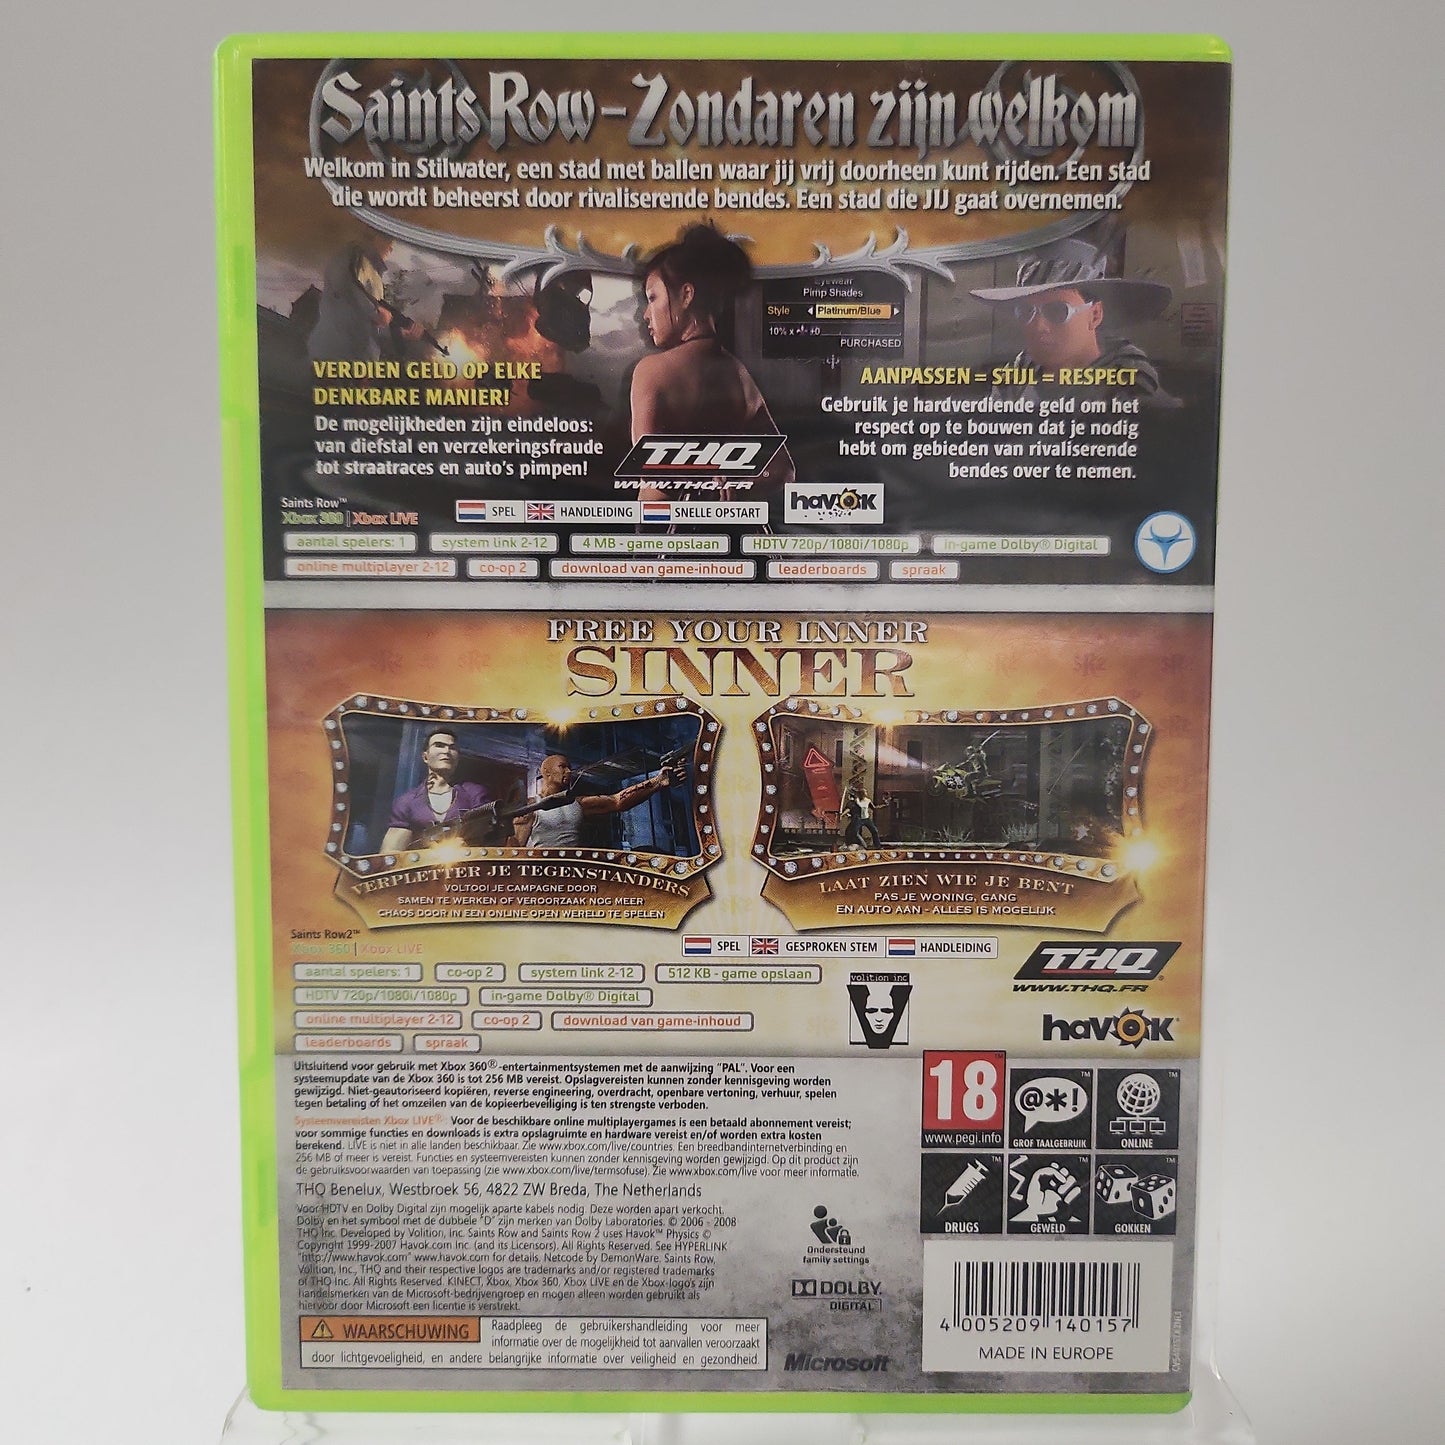 Doppelpack Saints Row &amp; Saints Row 2 Xbox 360